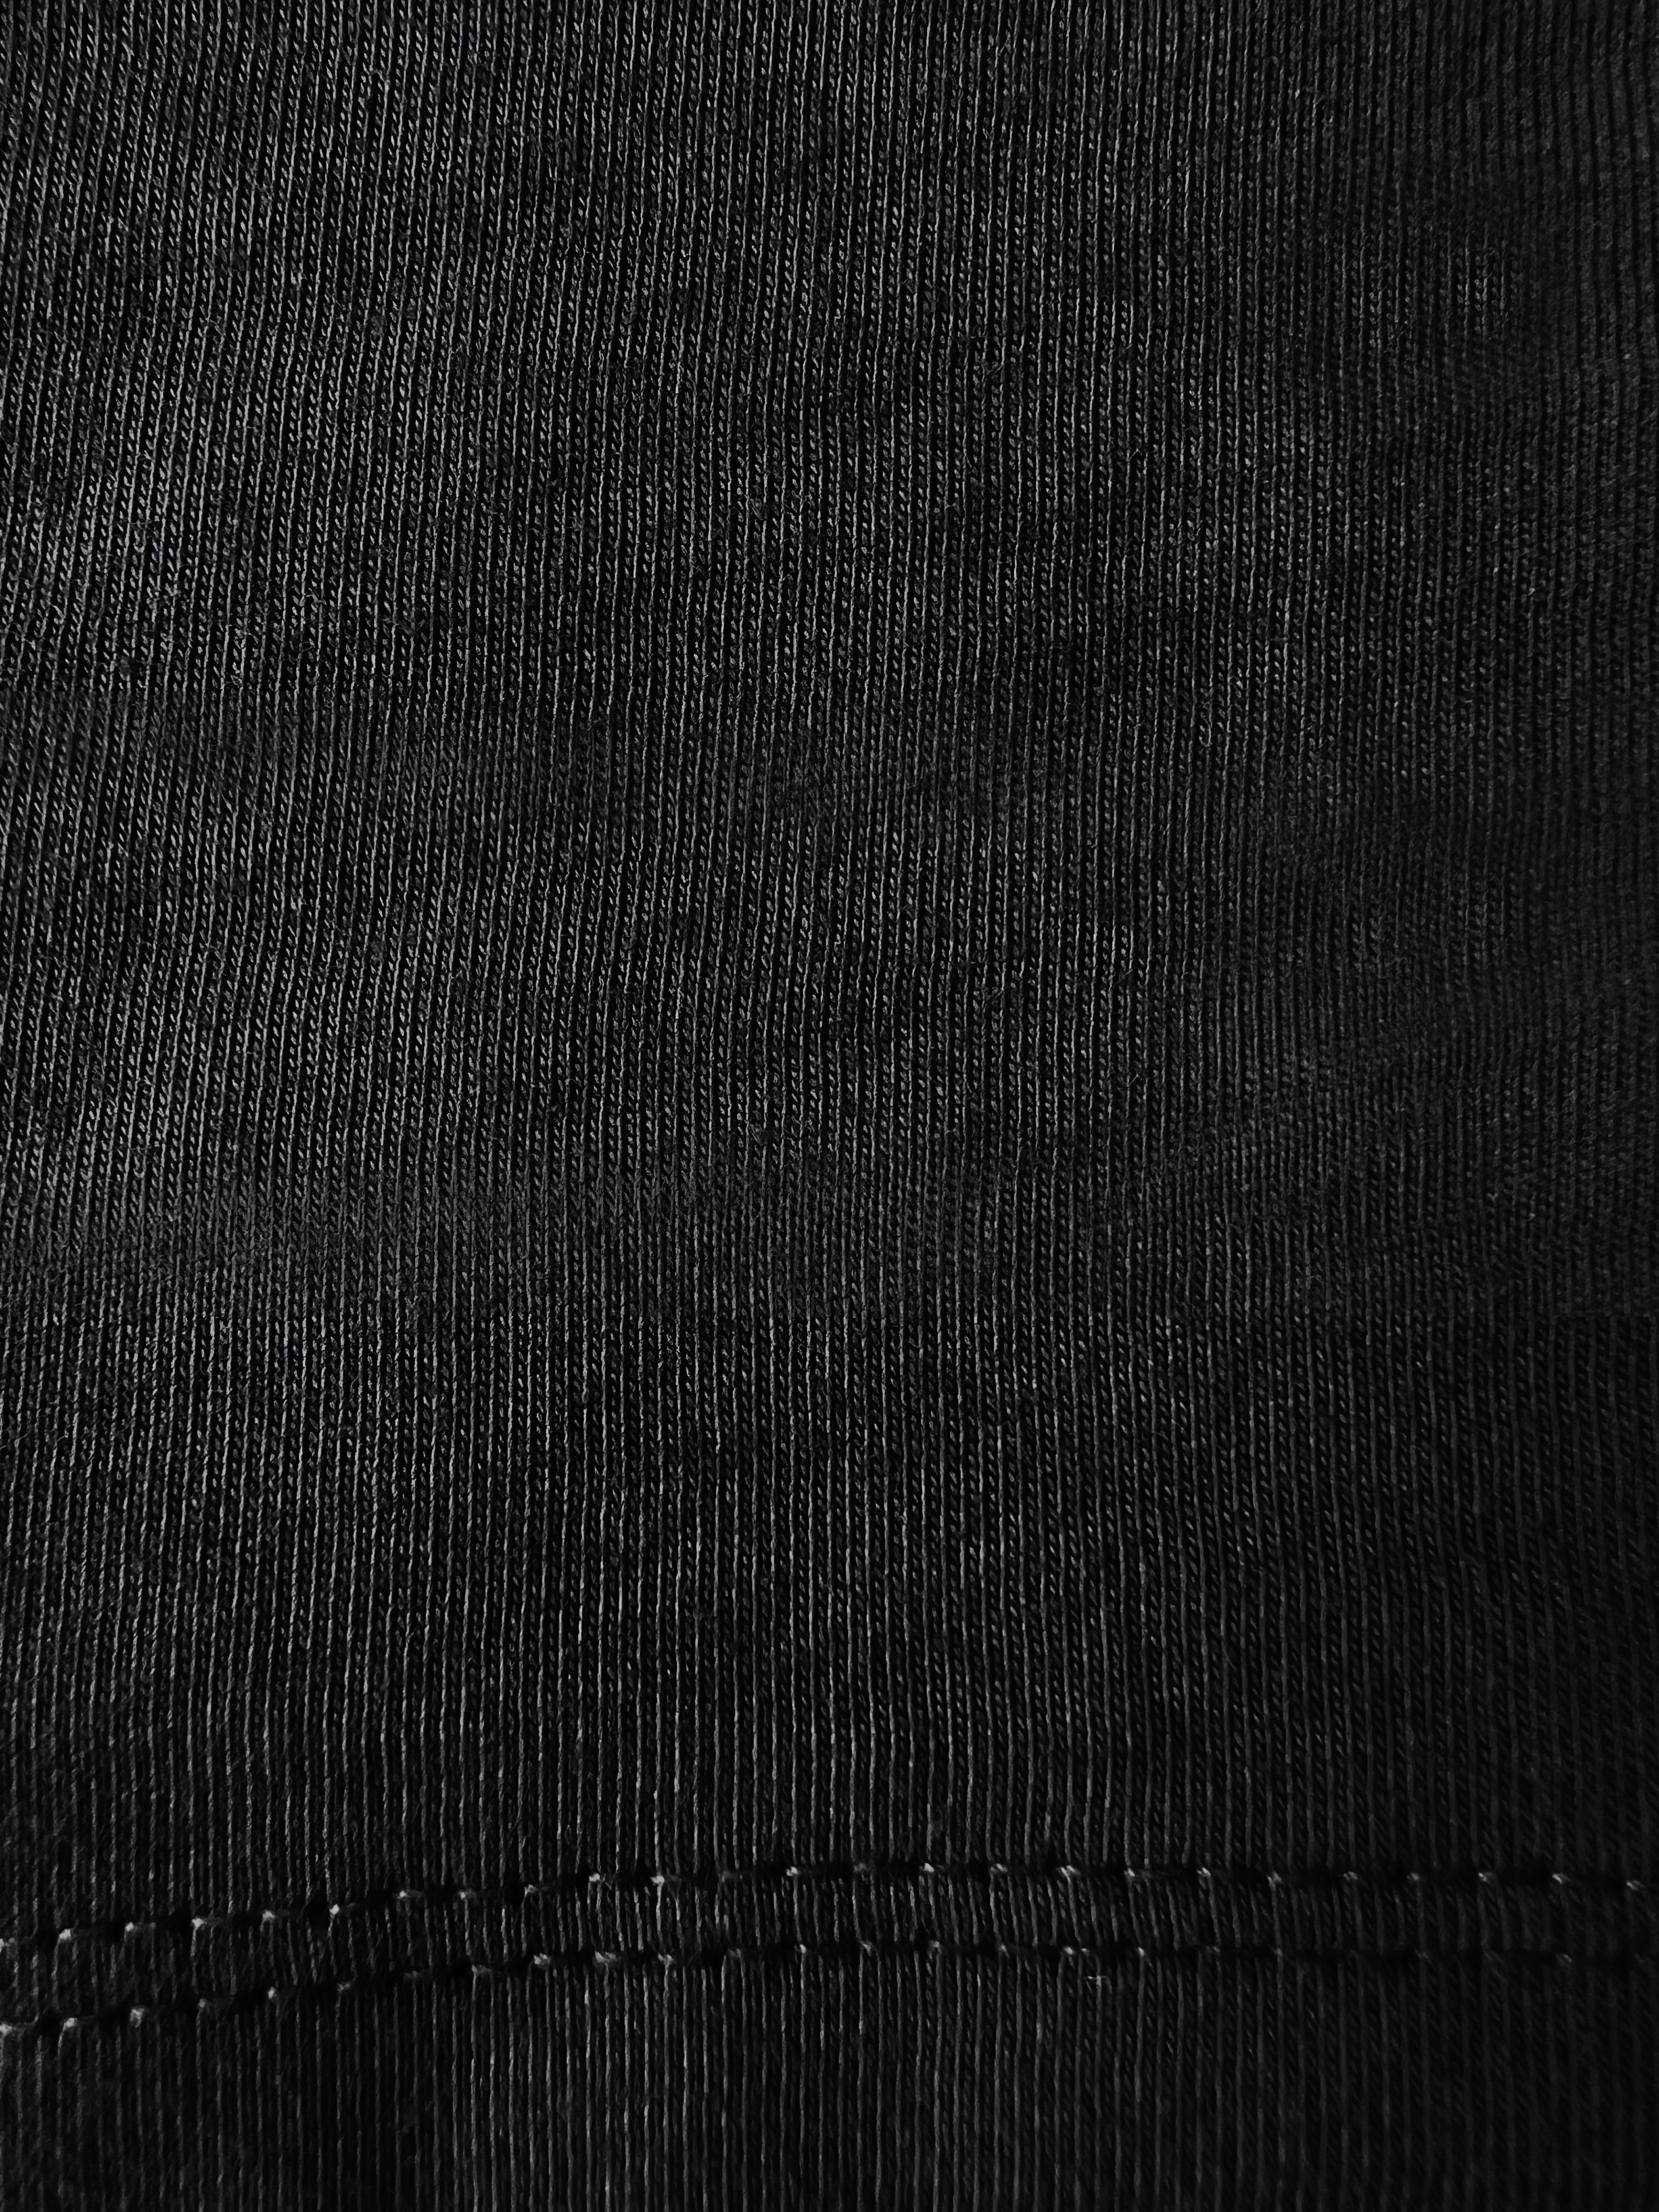 Premium Crew Neck Plain Black T-shirt made with high quality cotton